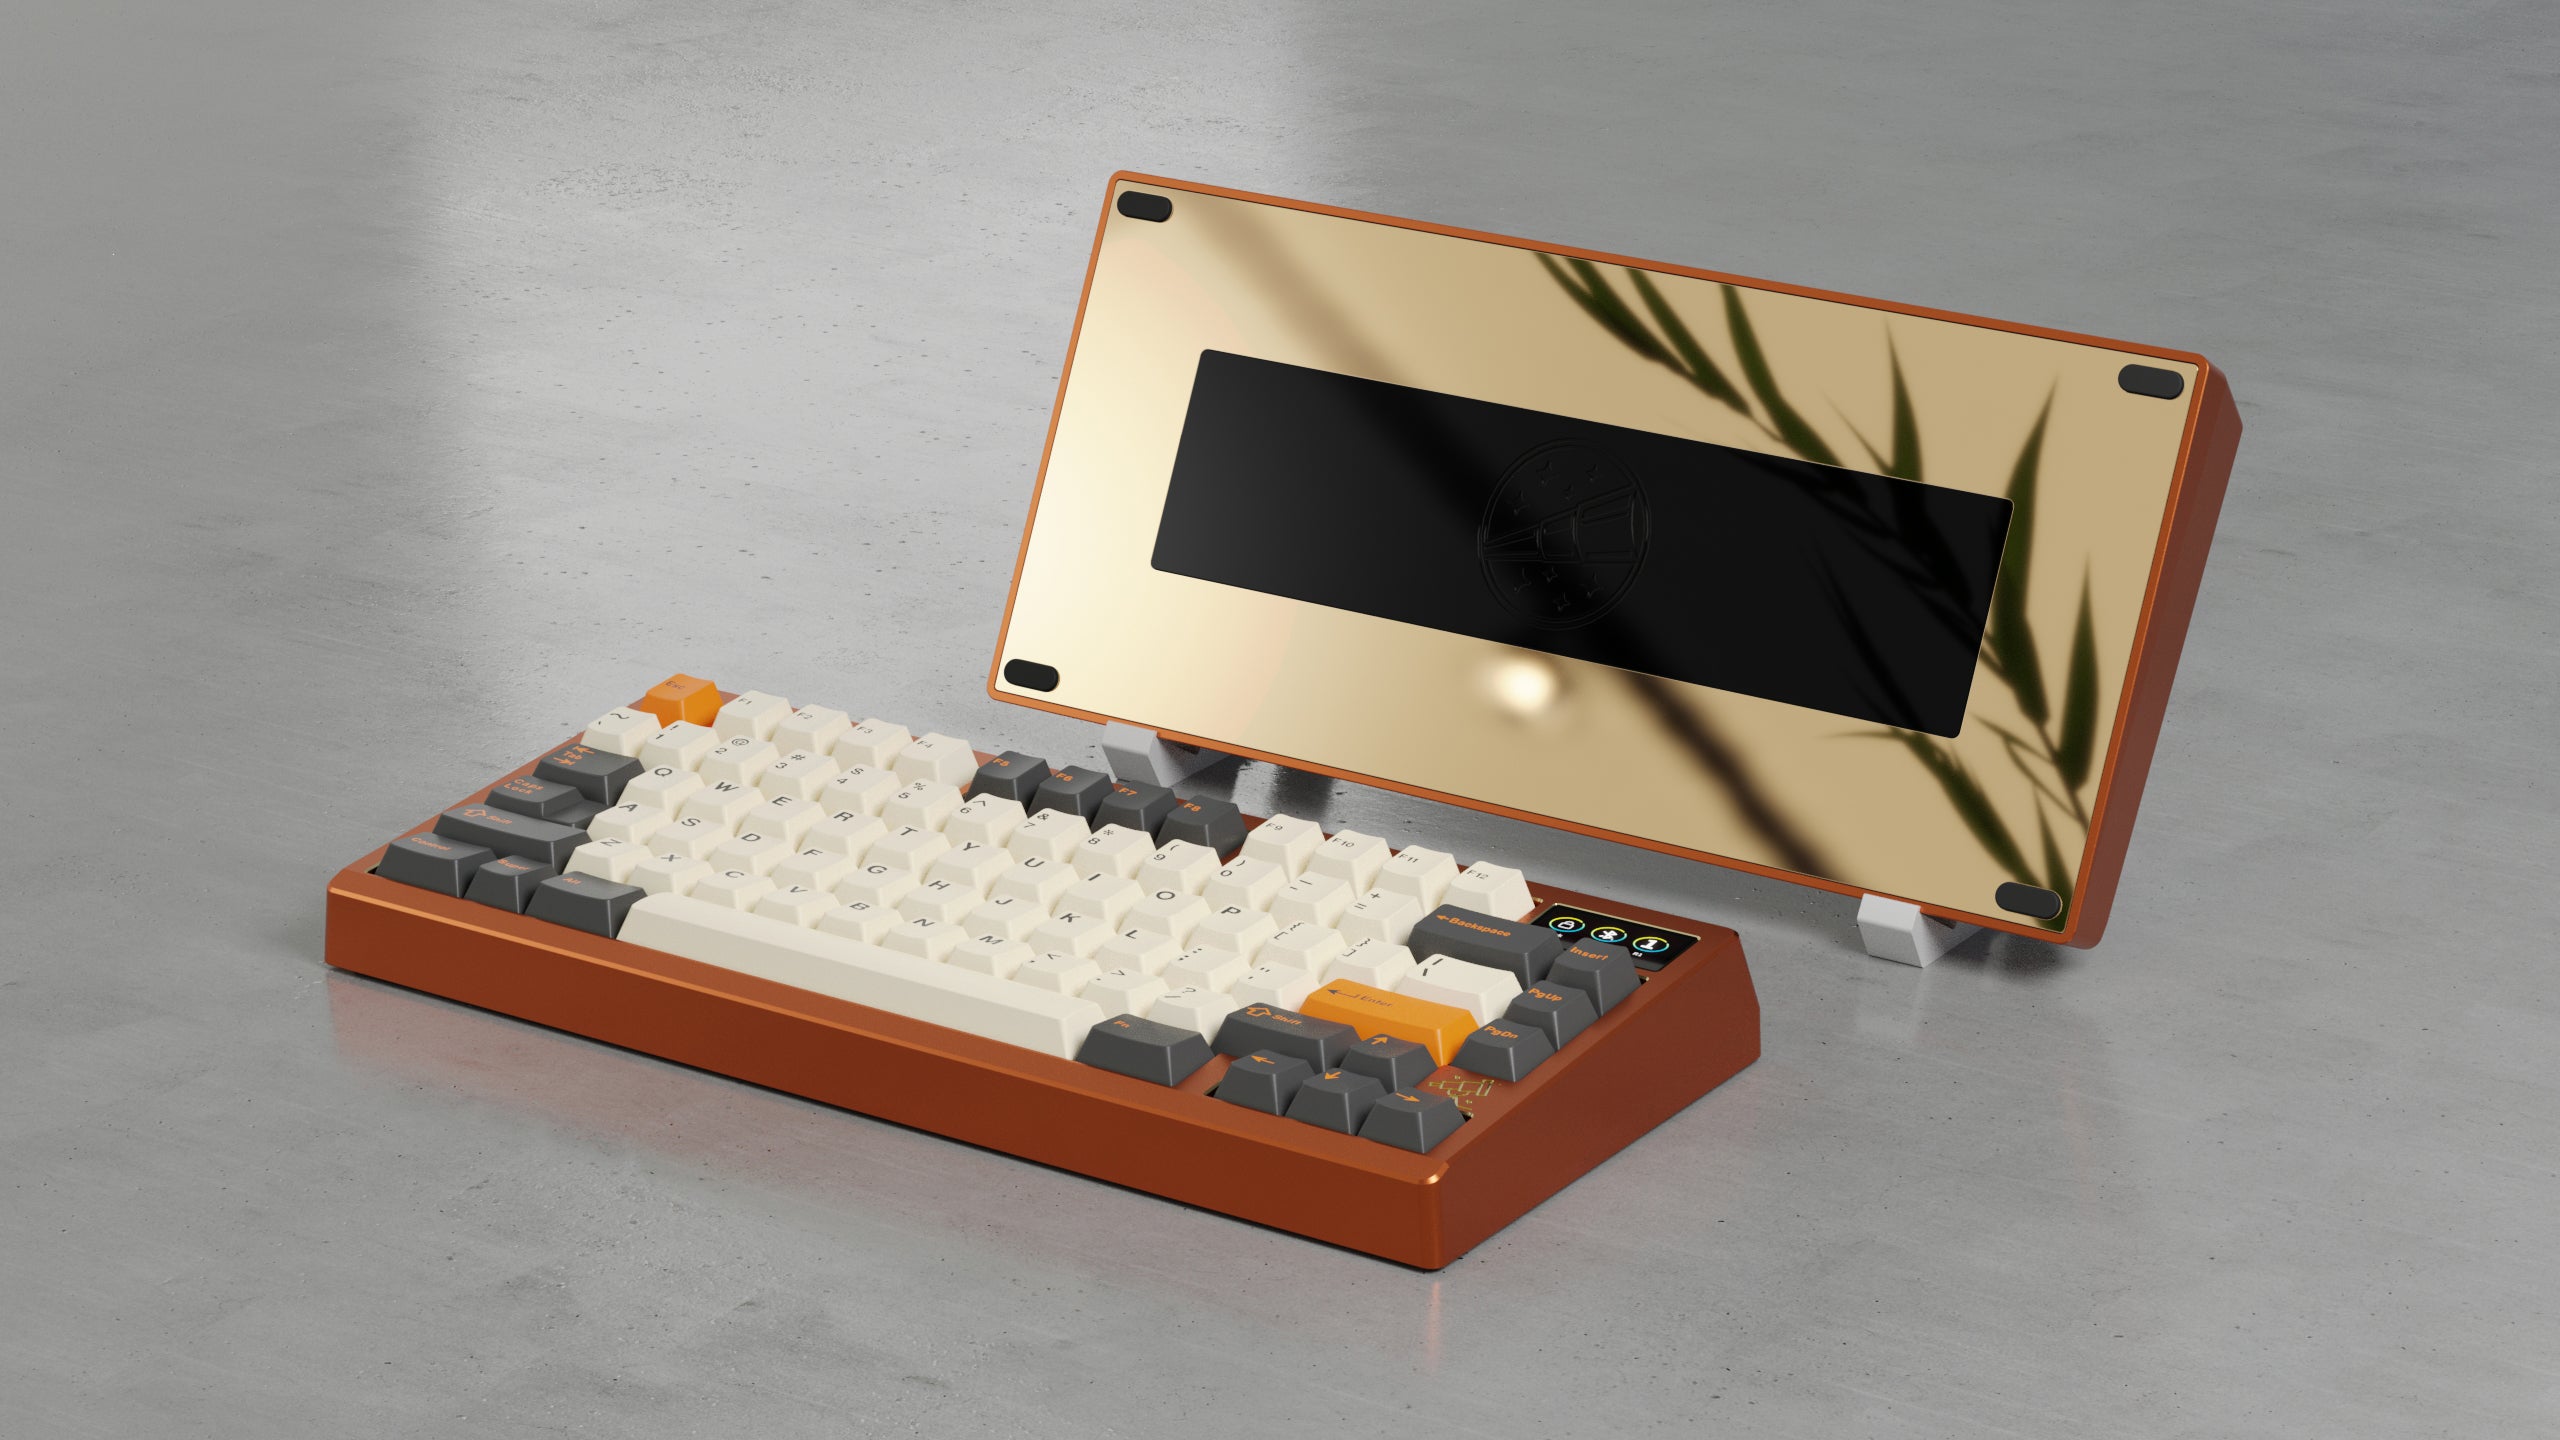 Zoom75 SE Keyboard - Anodized Orange [Preorder]